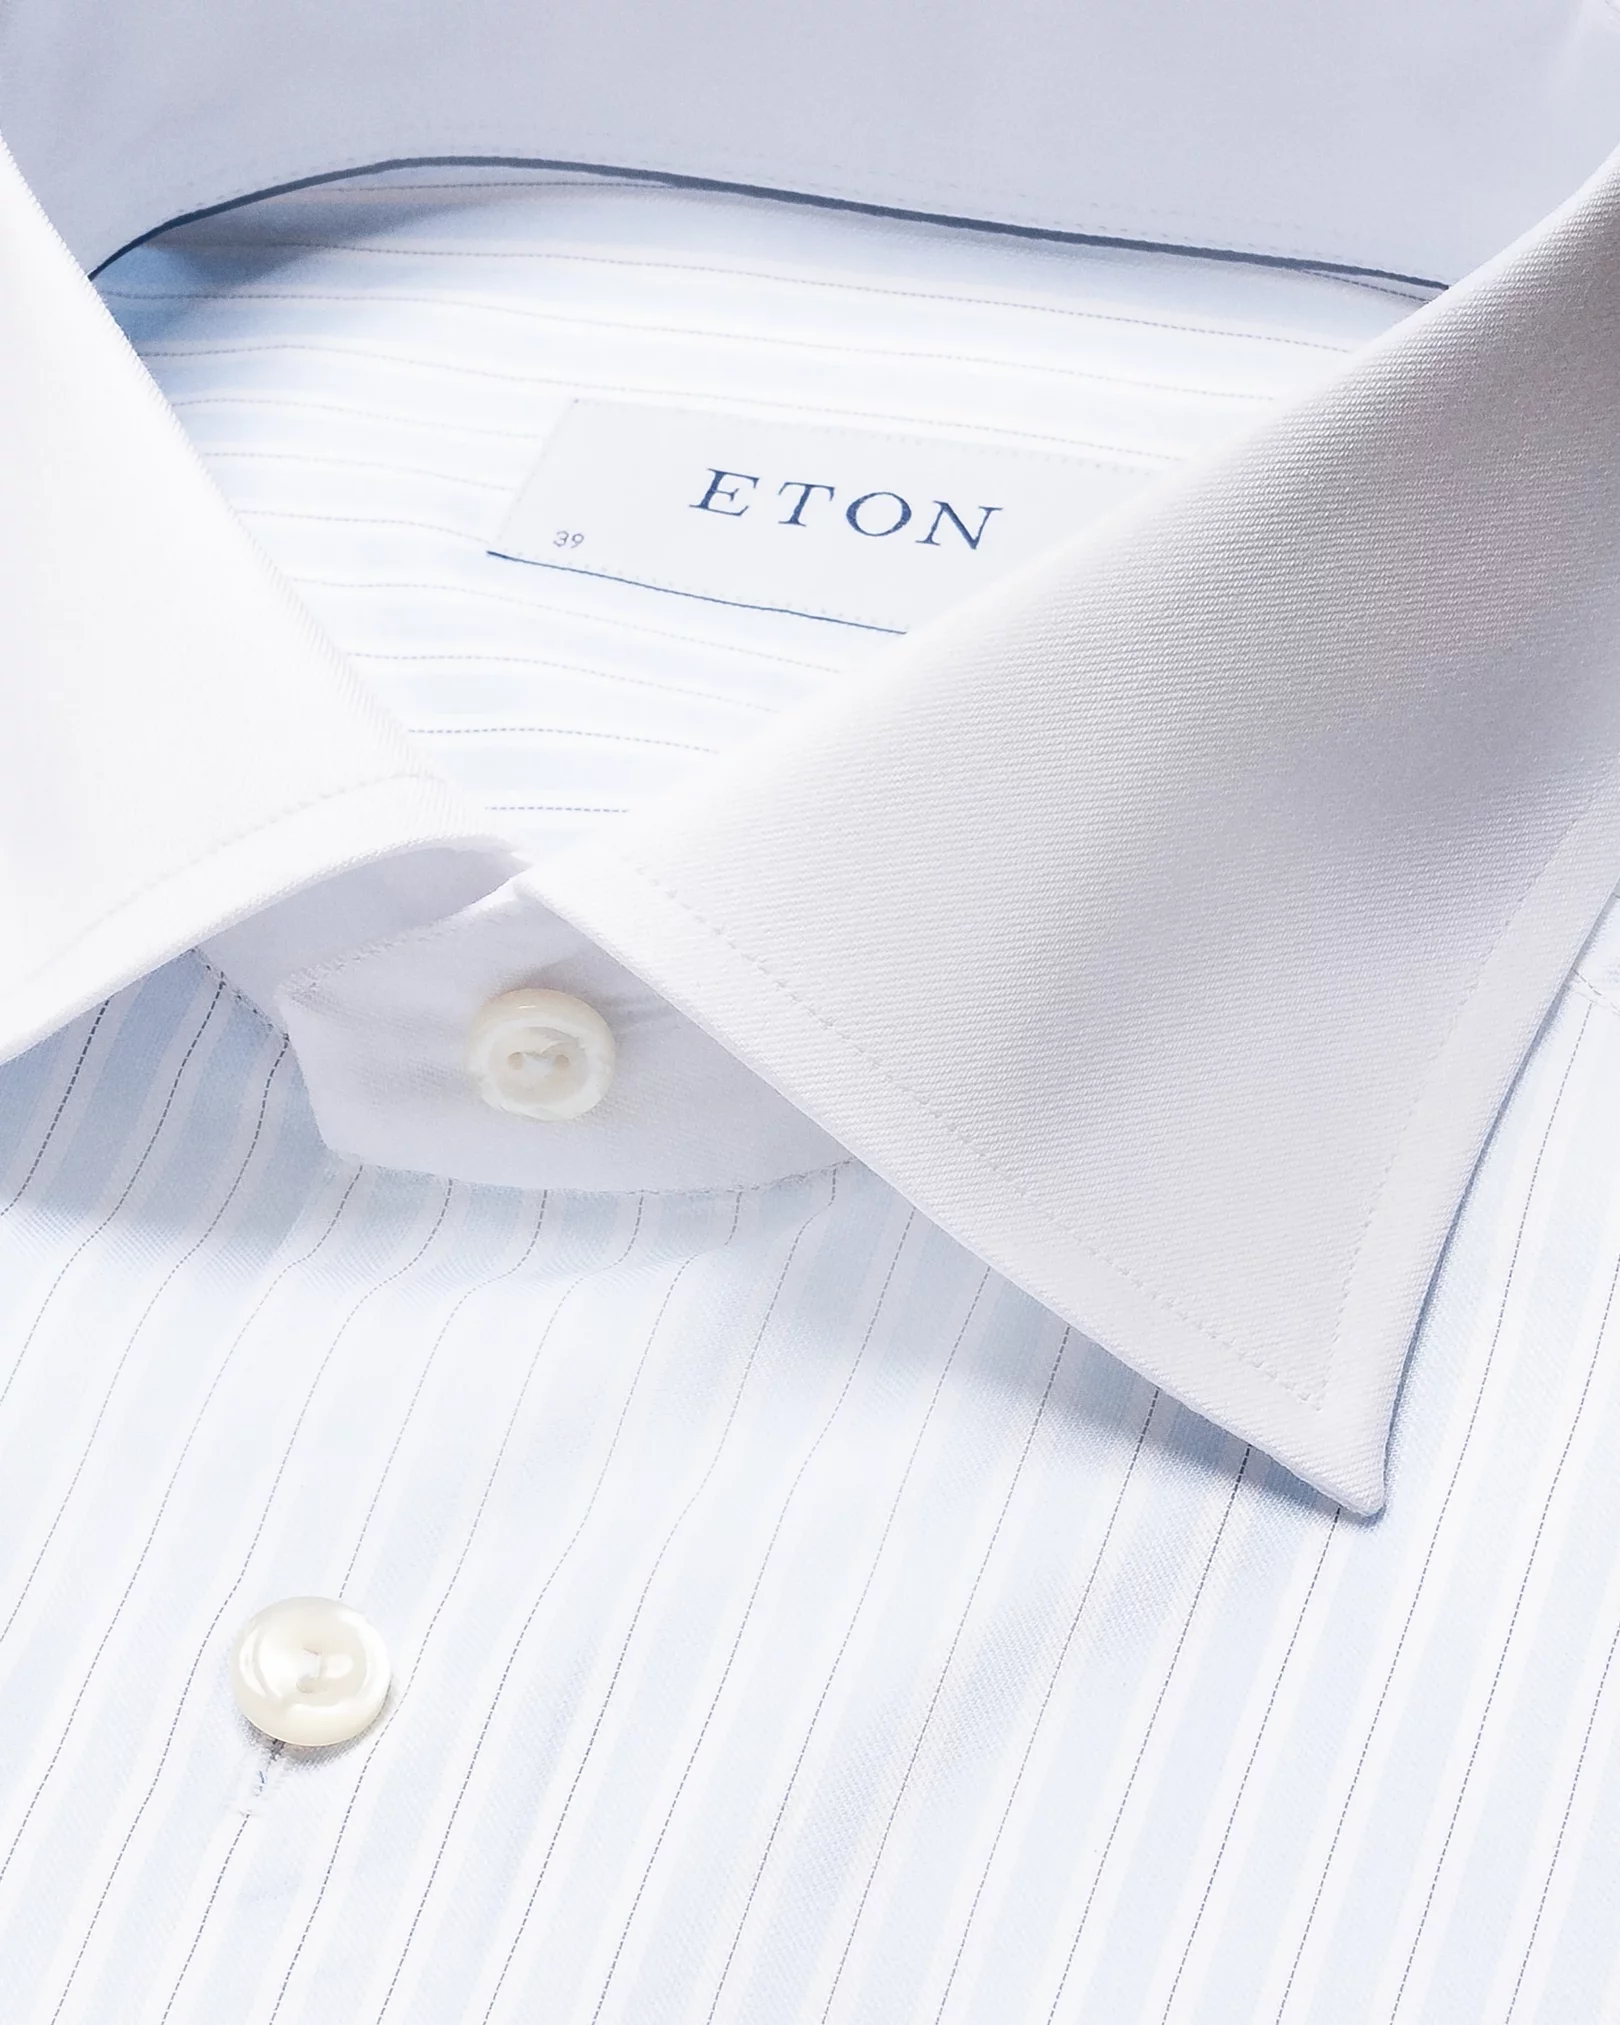 Light Blue Striped White Collar Signature Twill Shirt